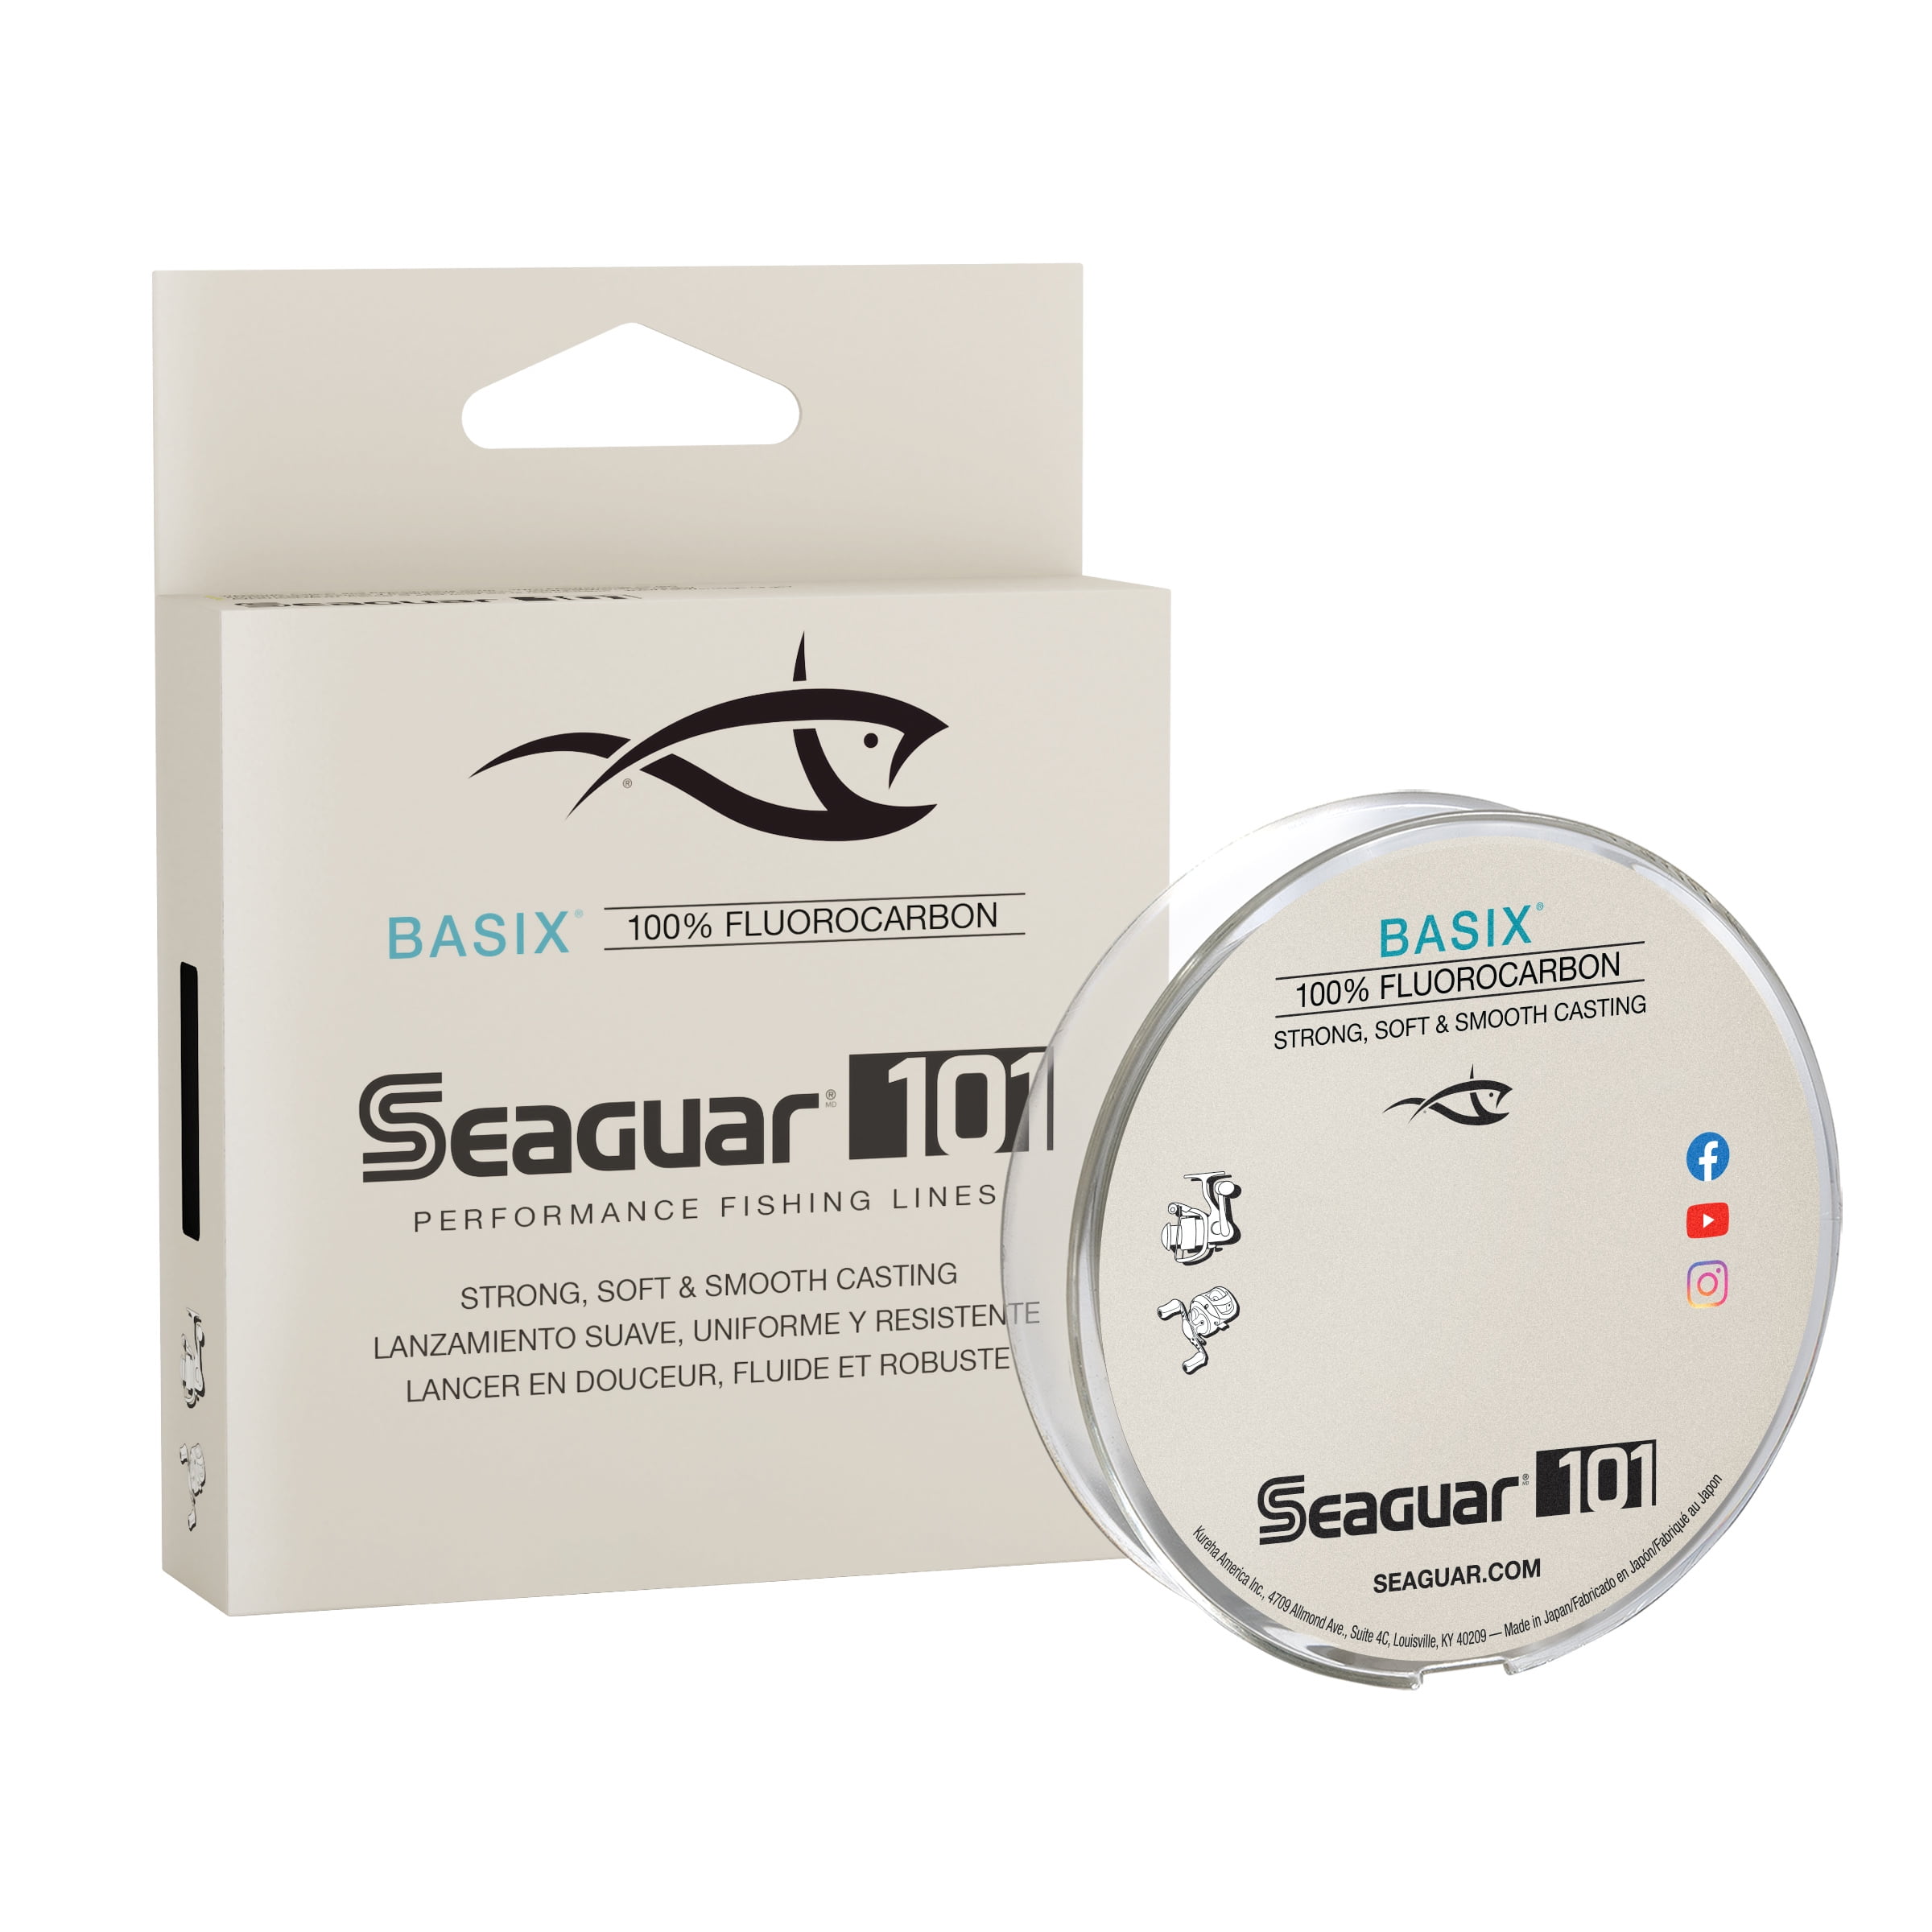 Seaguar Basix Fluorocarbon 10 lb